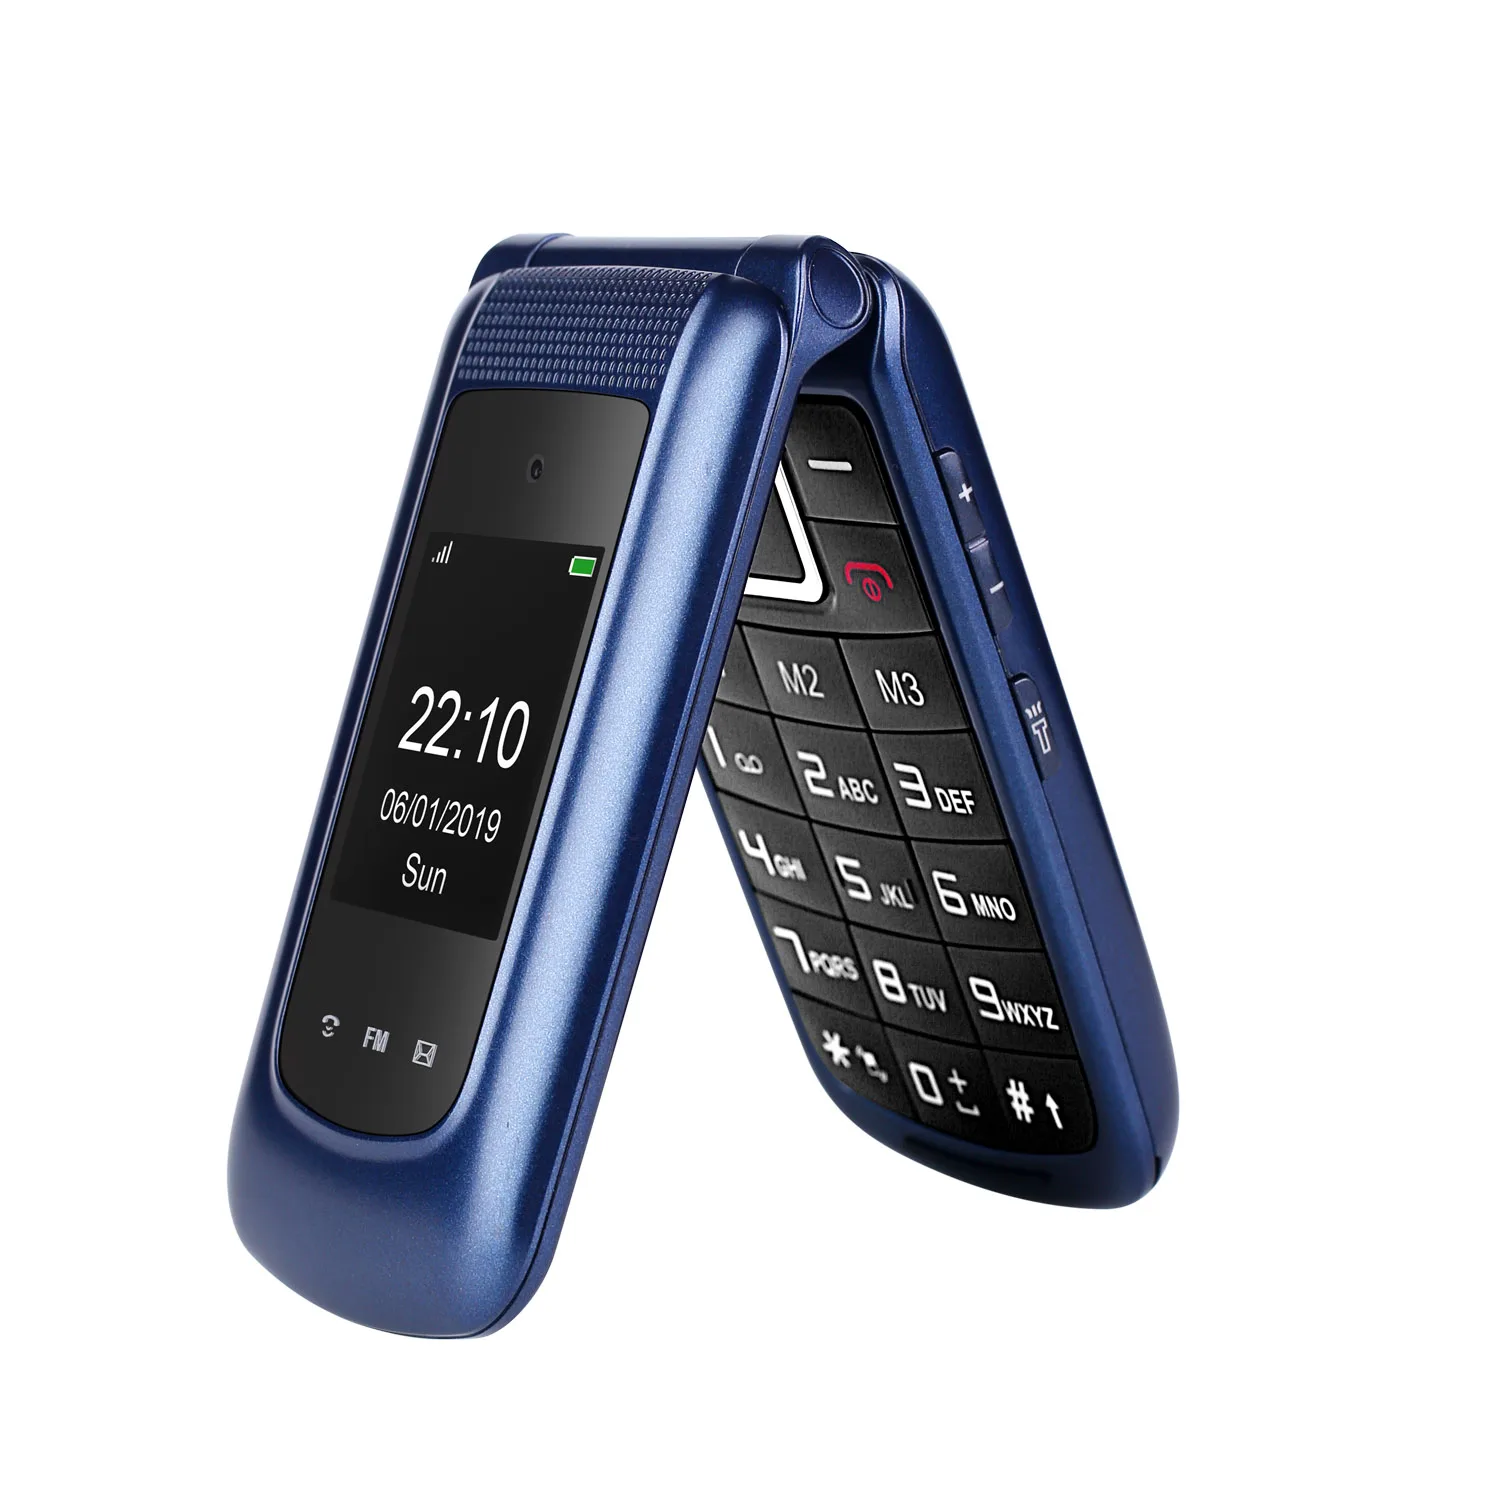 

Ushining Uleway 2G Big Button Flip Mobile Phone for Elderly,Dual Sim Free Unlocked Phone SOS Button Loud Speaker for Senior